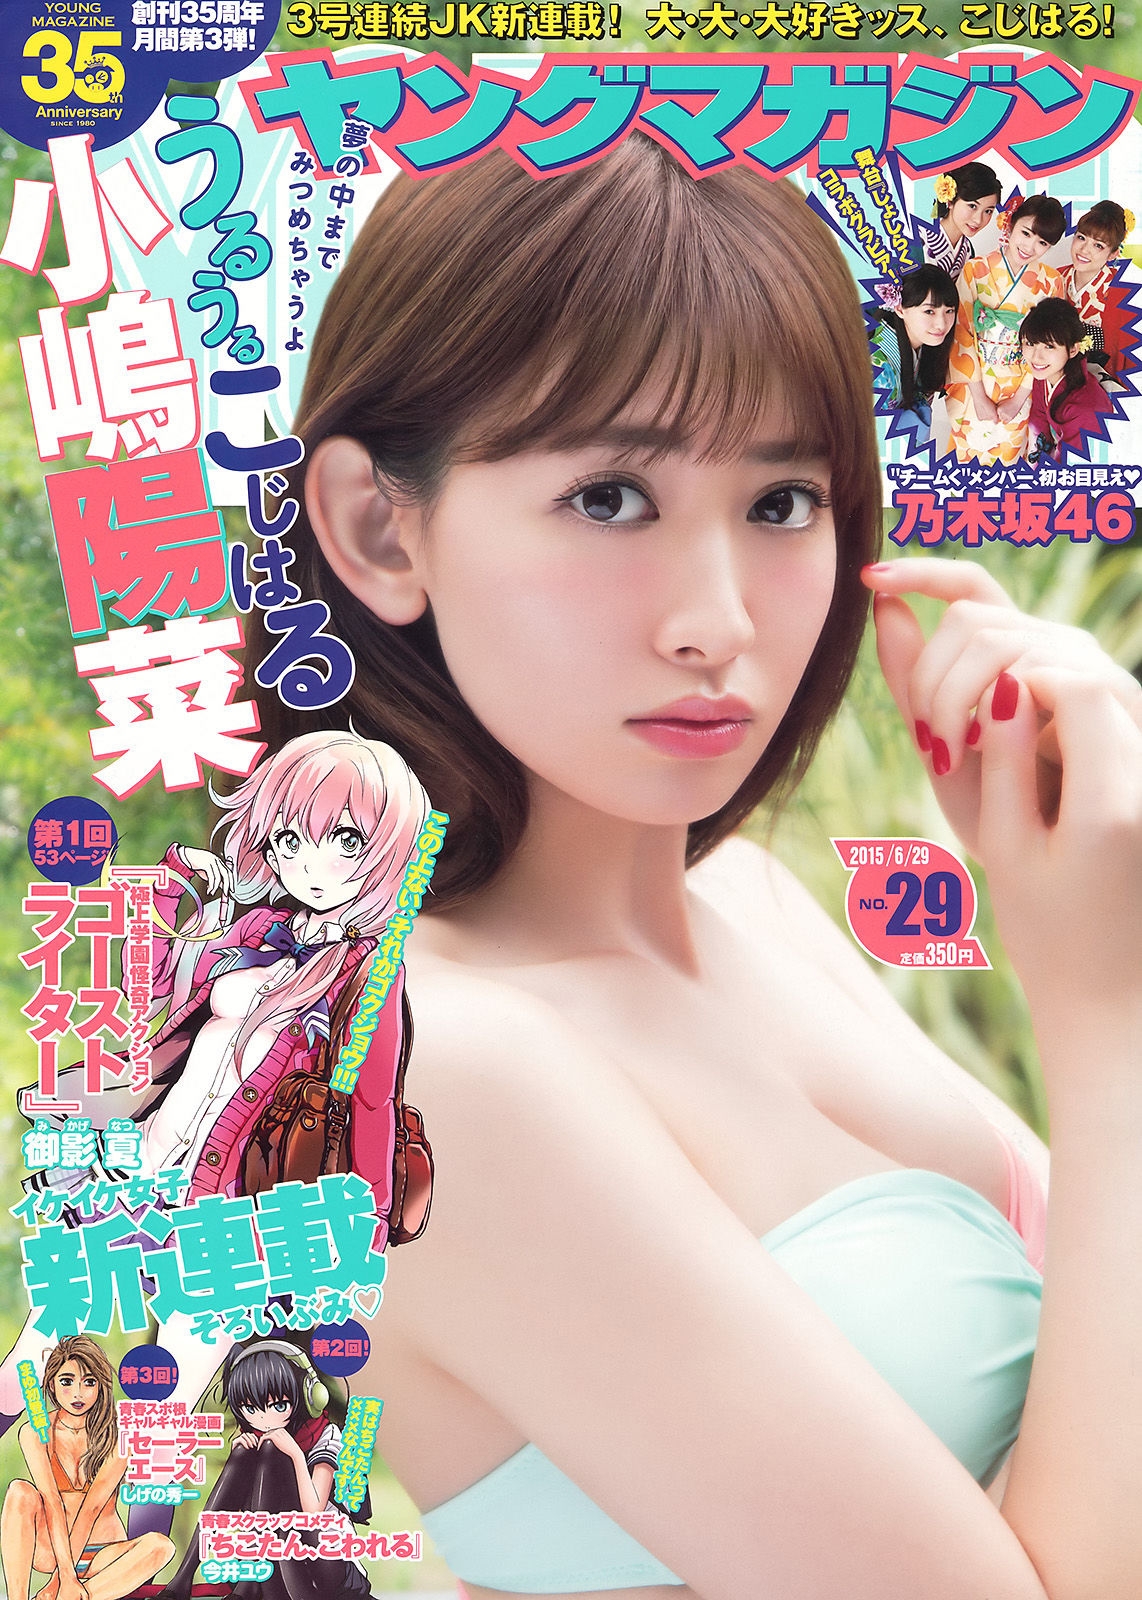 [Young Magazine] 2015年No.29 小嶋陽菜 乃木坂46  第-1张